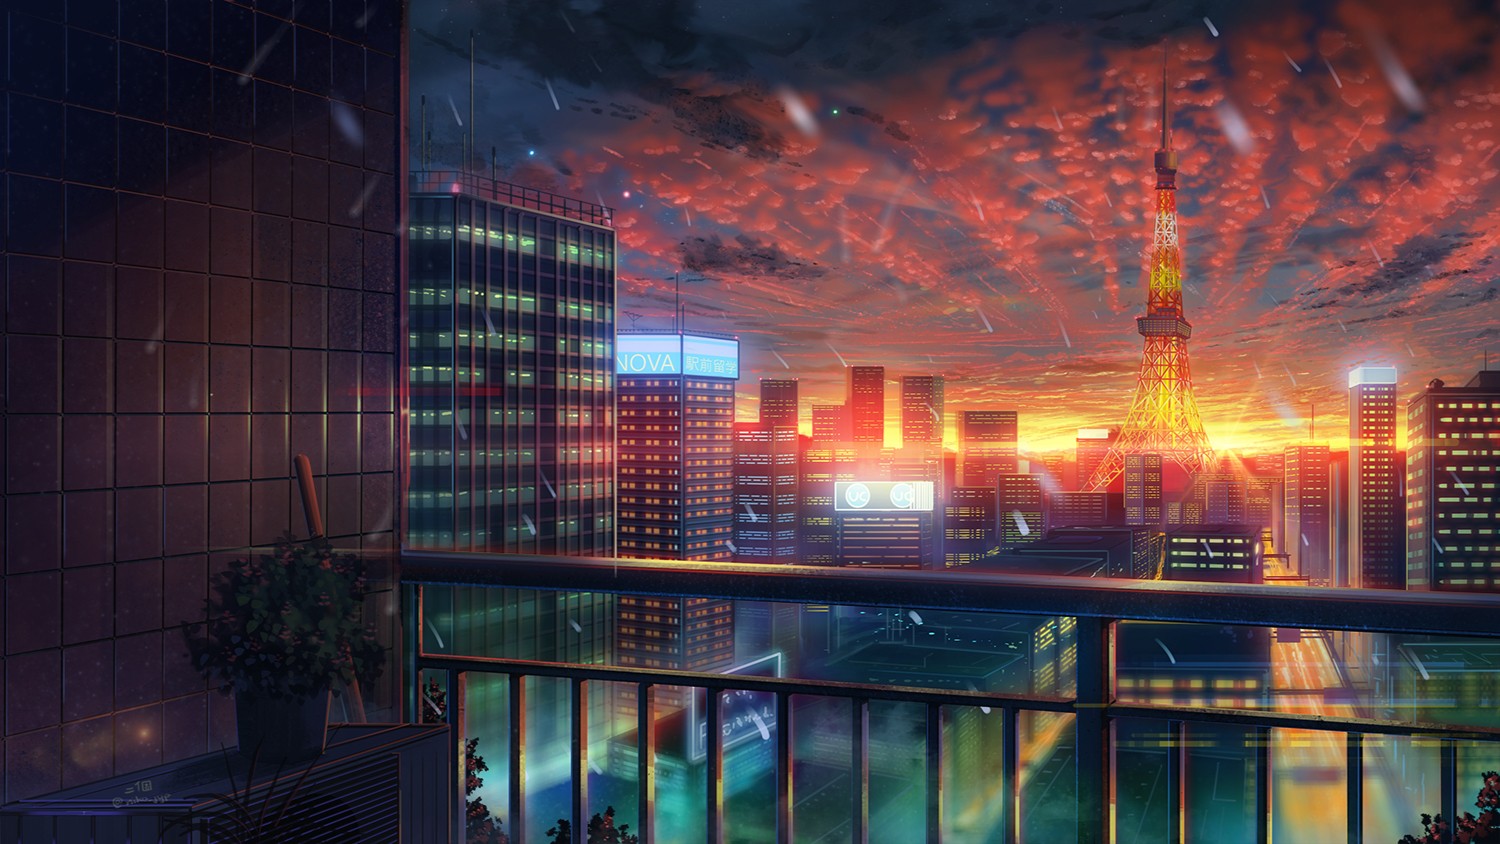 Anime 1500x844 Tokyo Tokyo Tower sunset Asia cityscape anime Pixiv sky orange sky balcony